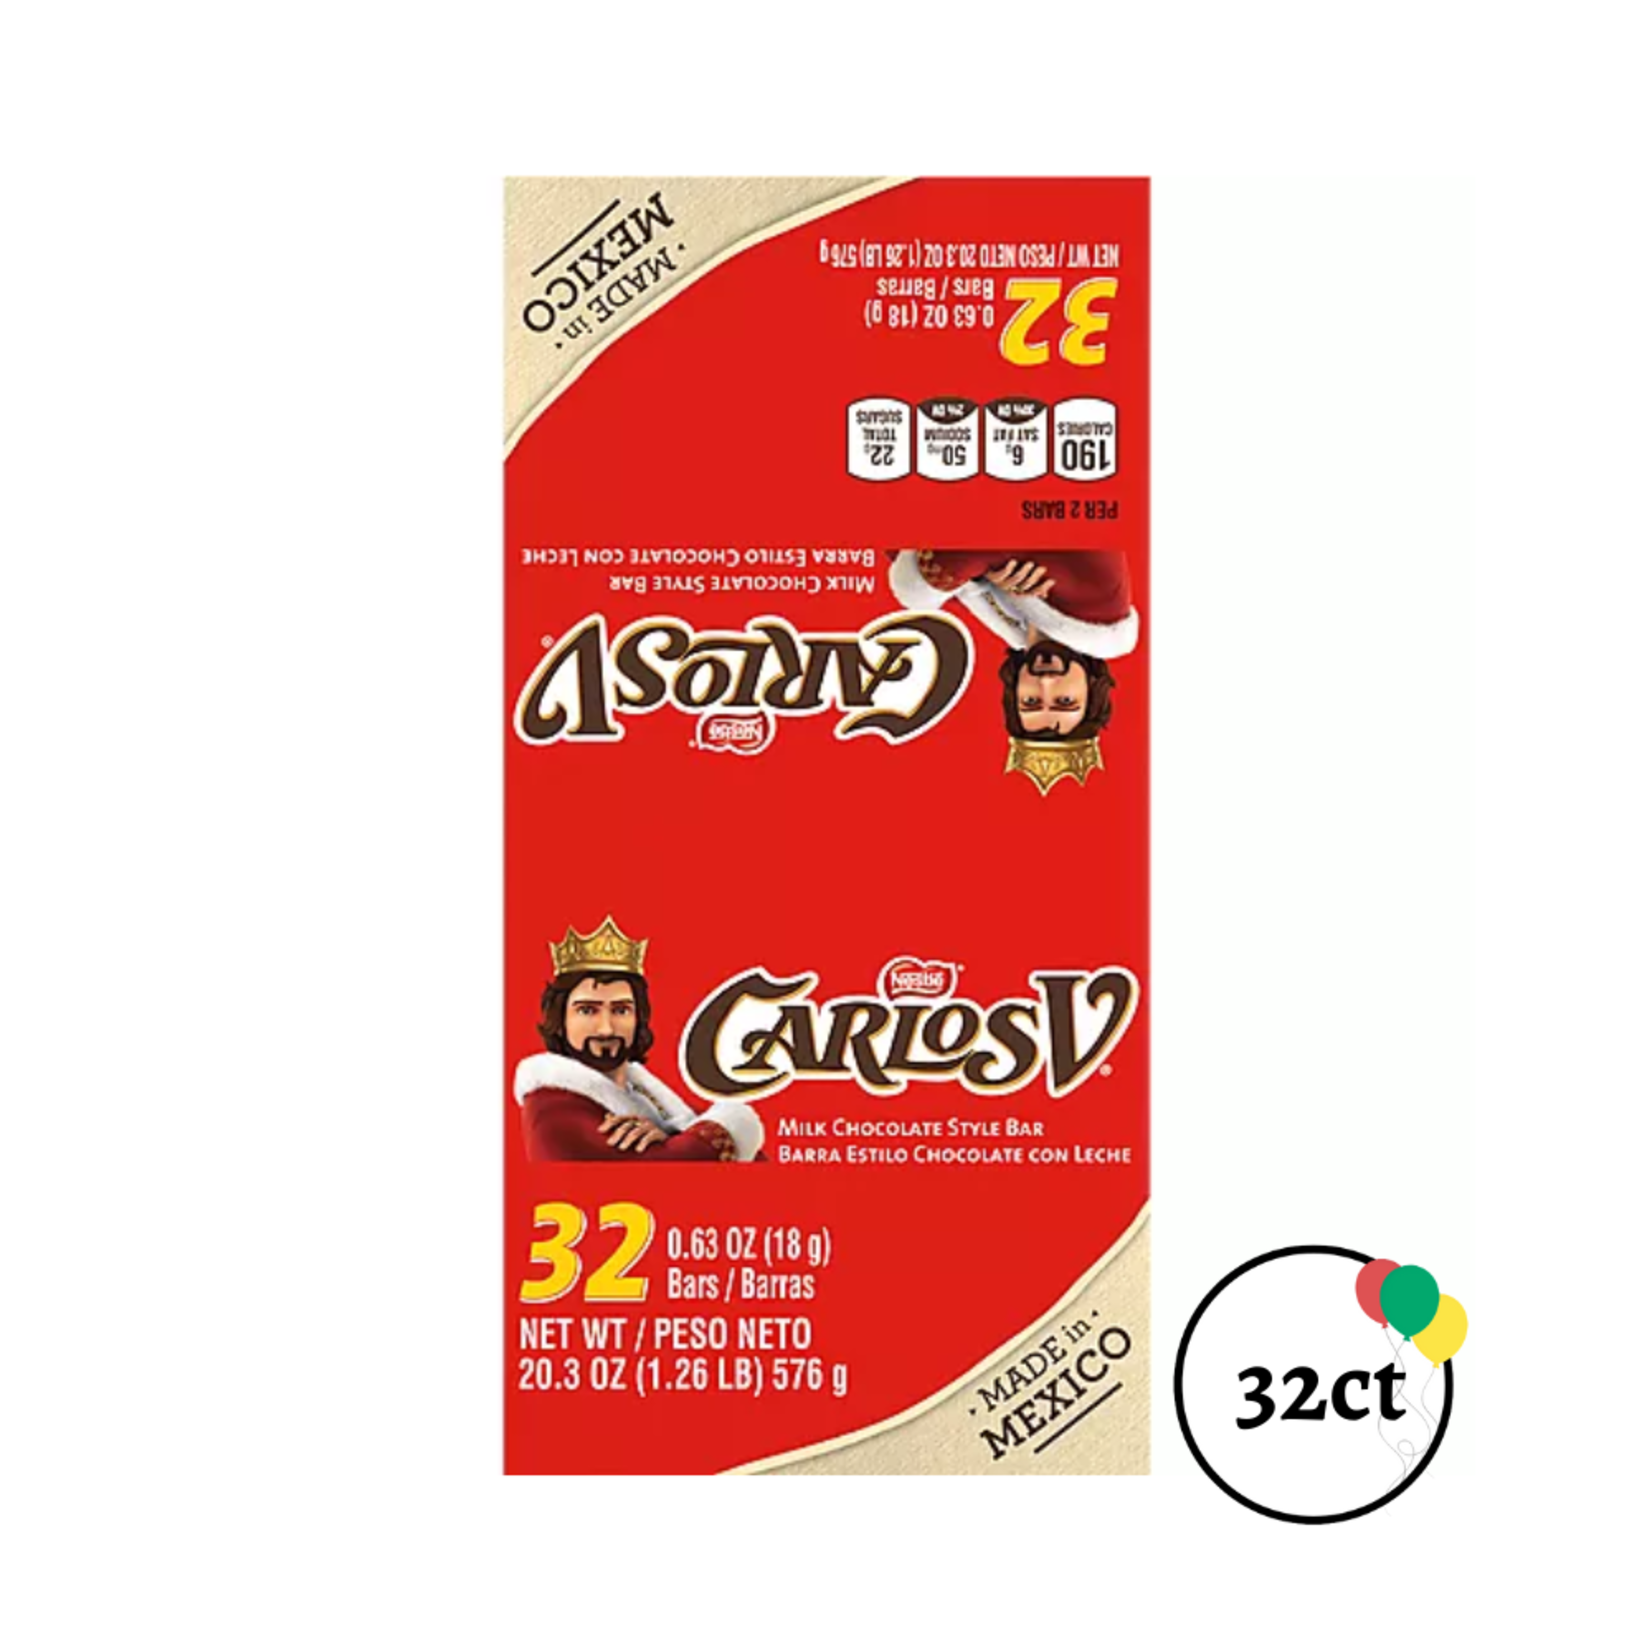 Nestle Carlosv 32ct